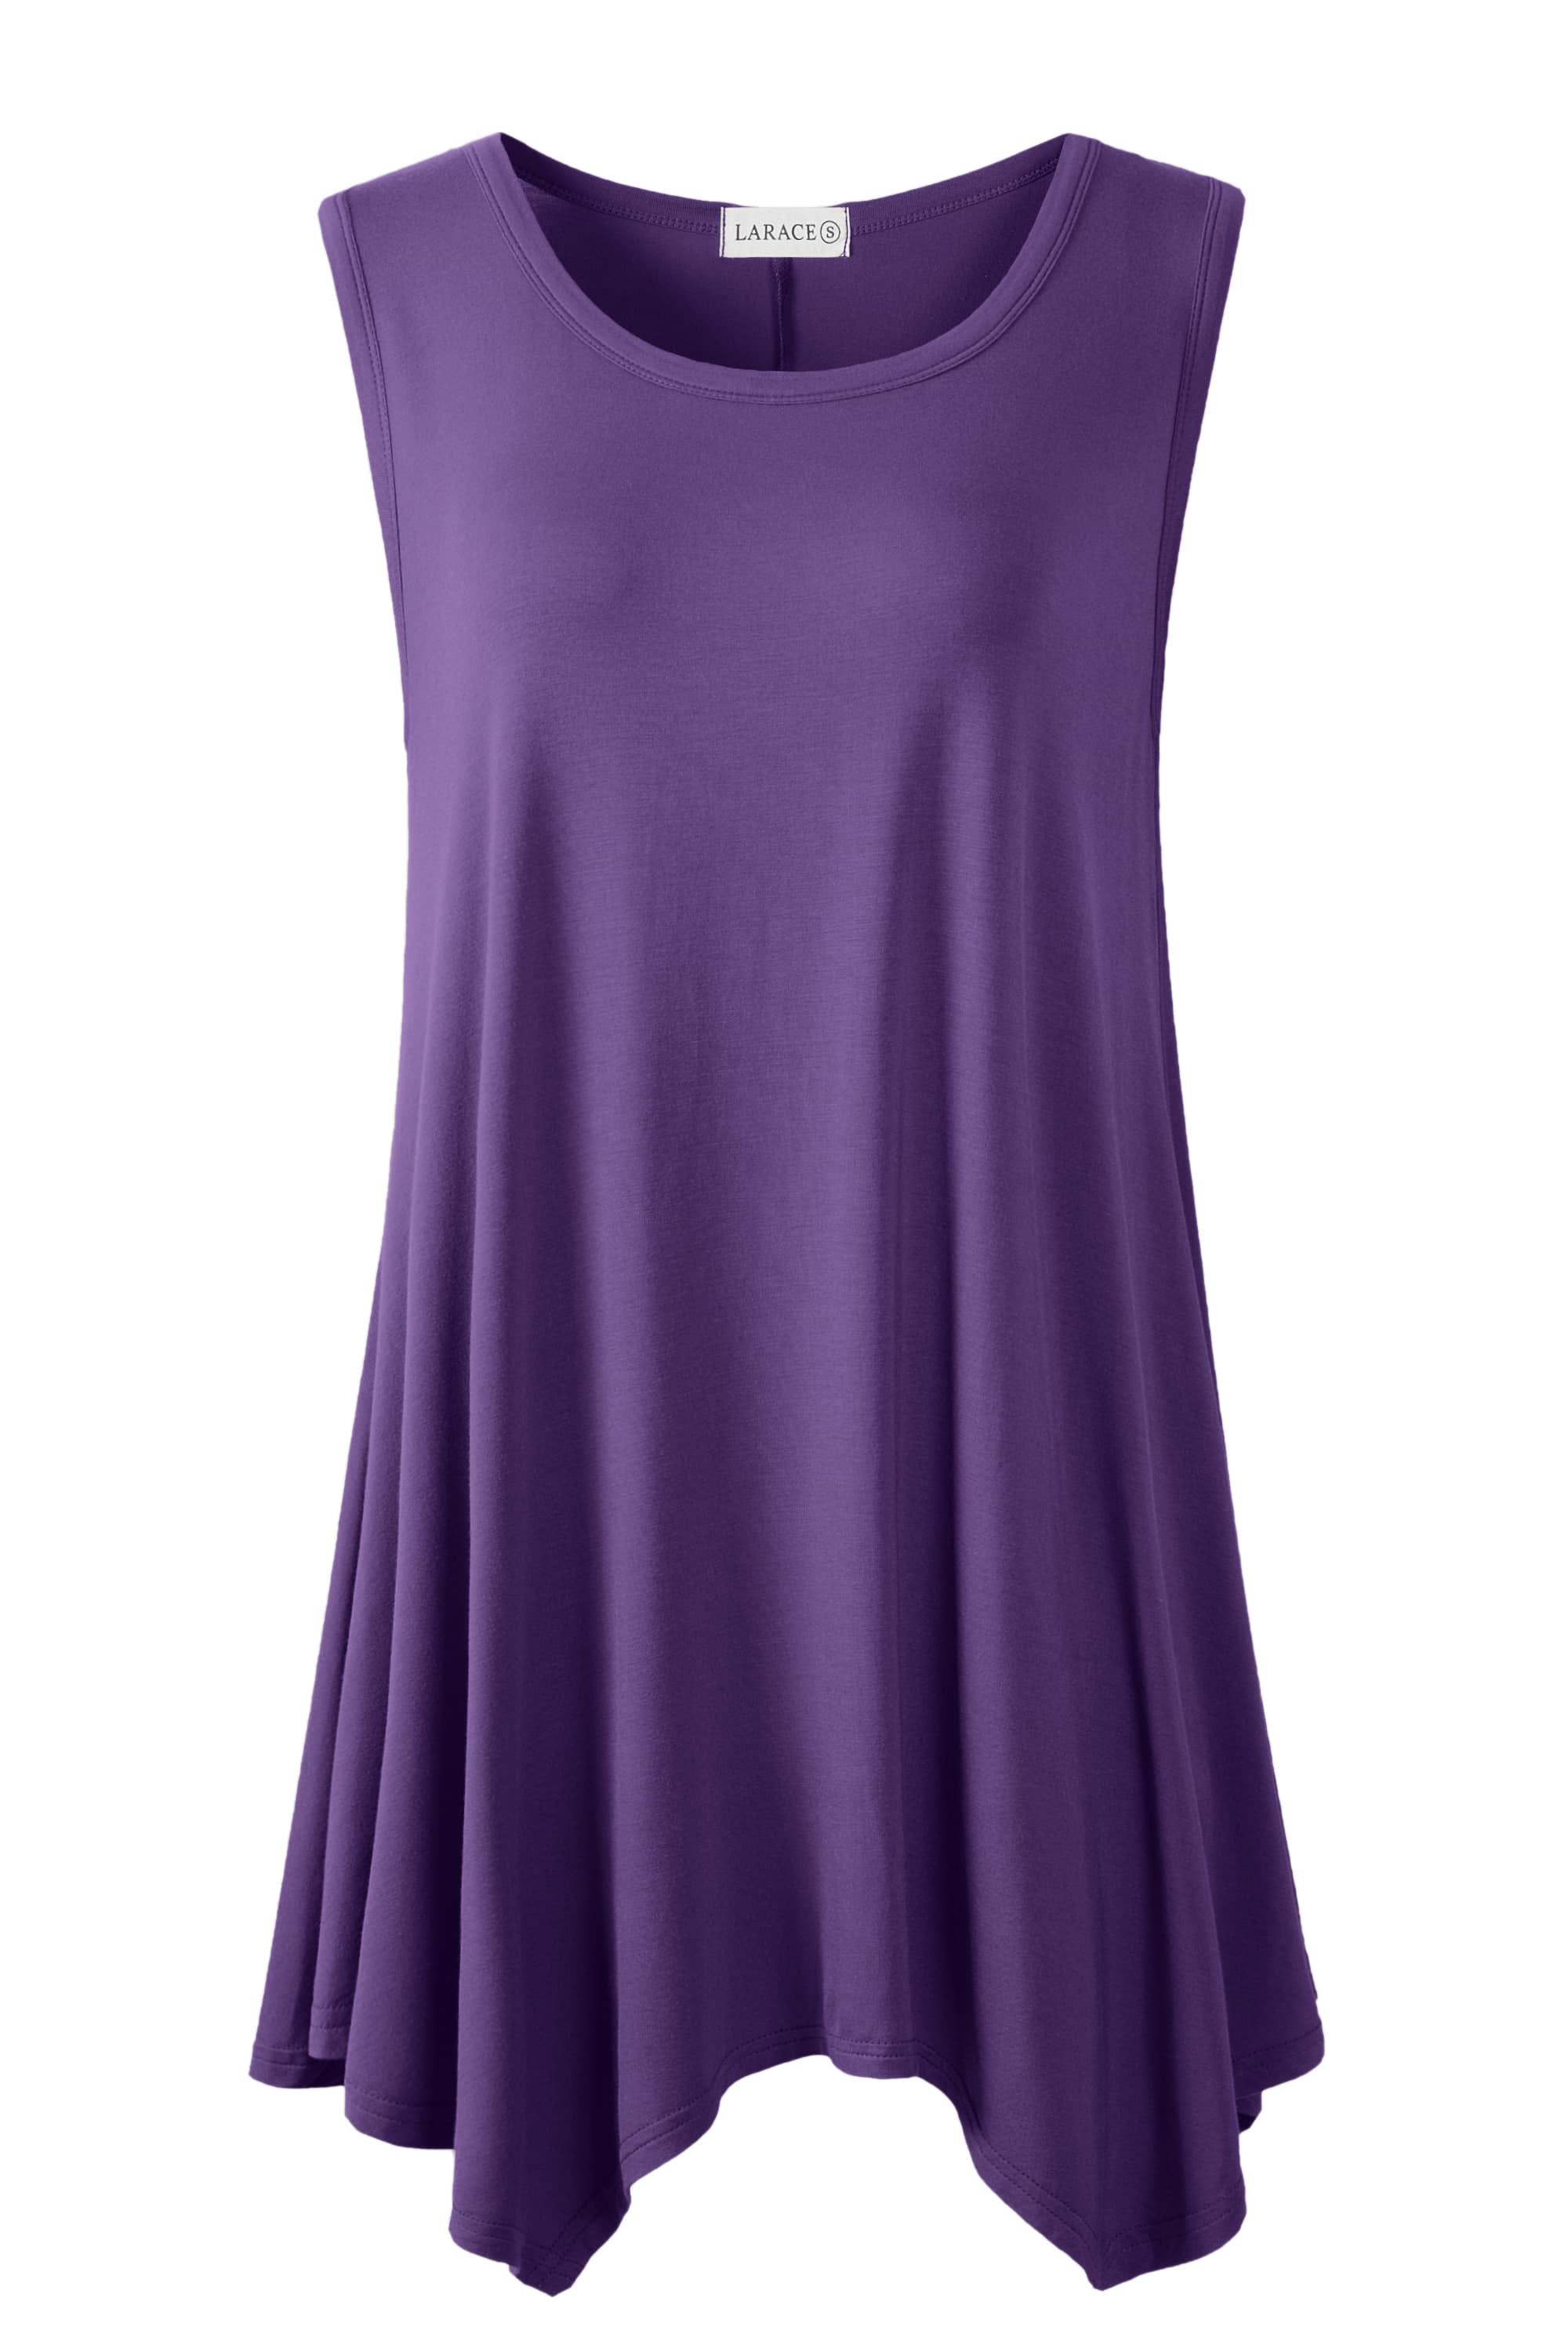 QWERTYU Womens White Dressy Tops Square Neck Flowy Compression Tanks for Women  Sleeveless Plus Size Summer Tunics Purple XL 